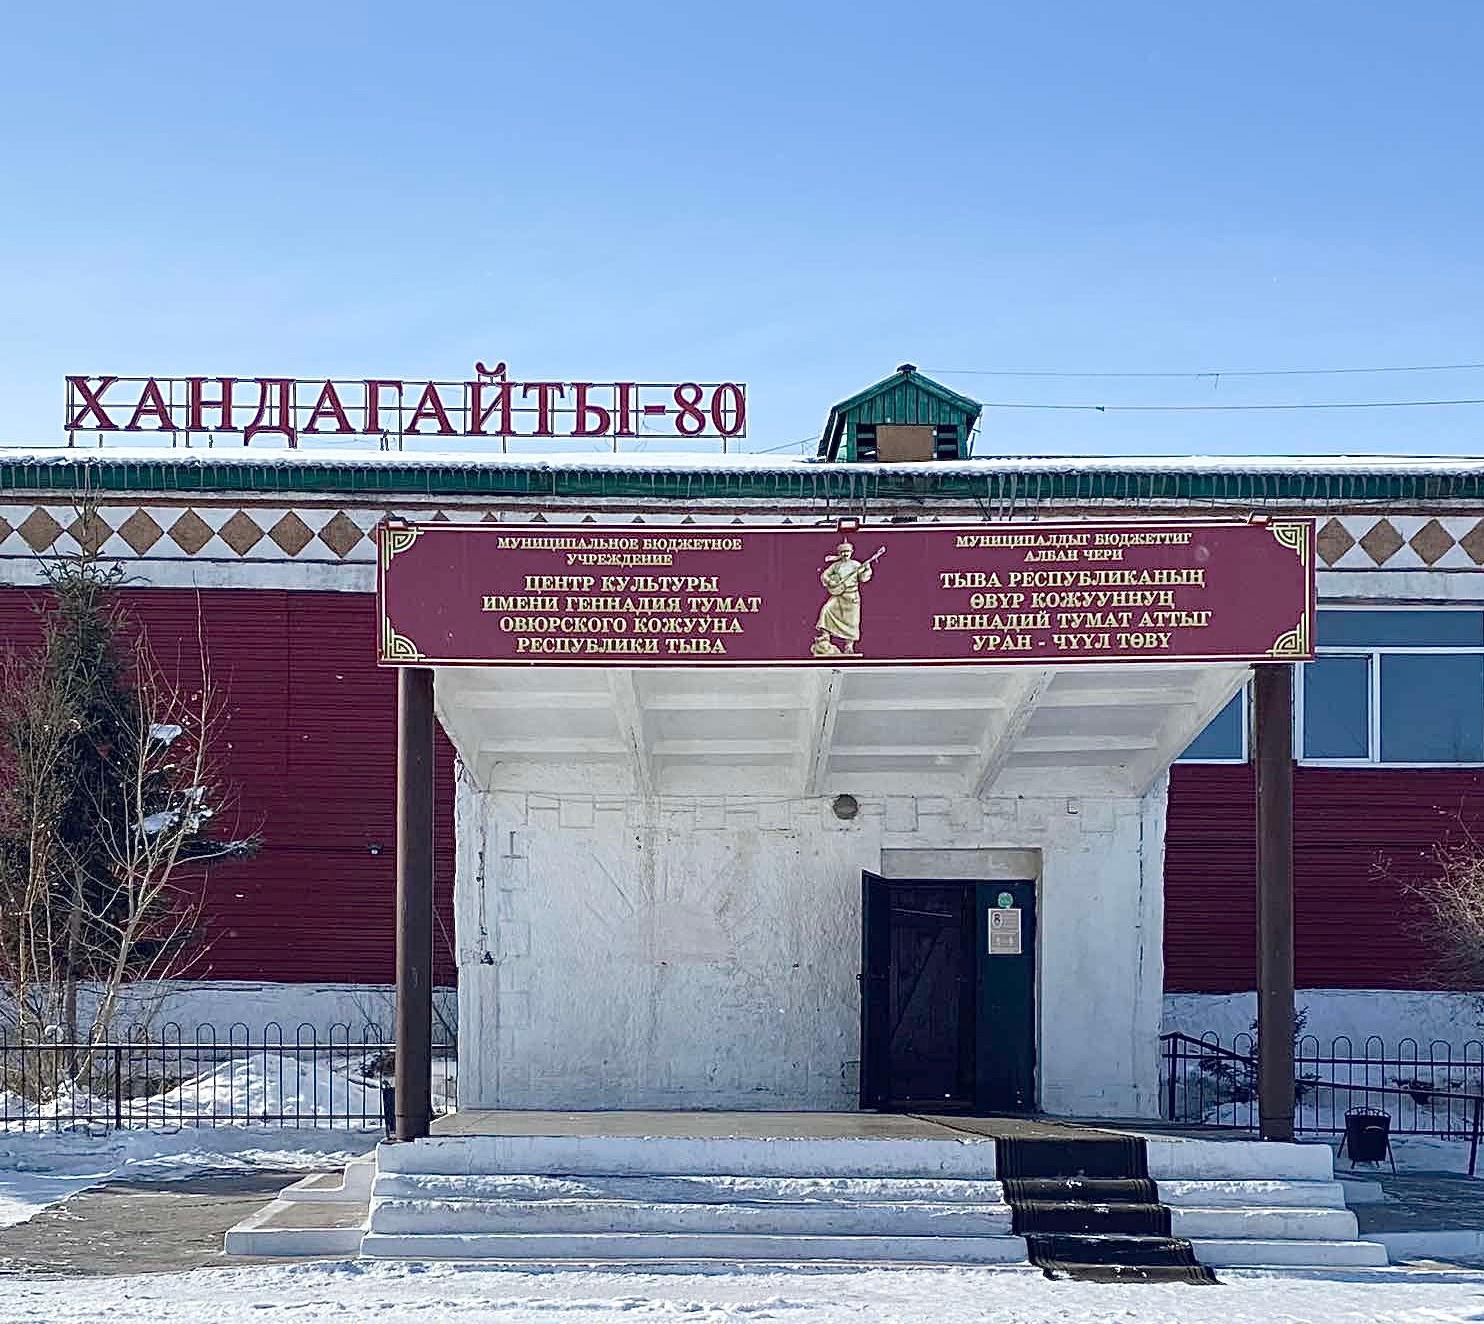 Центр культуры имени Геннадия Тумат